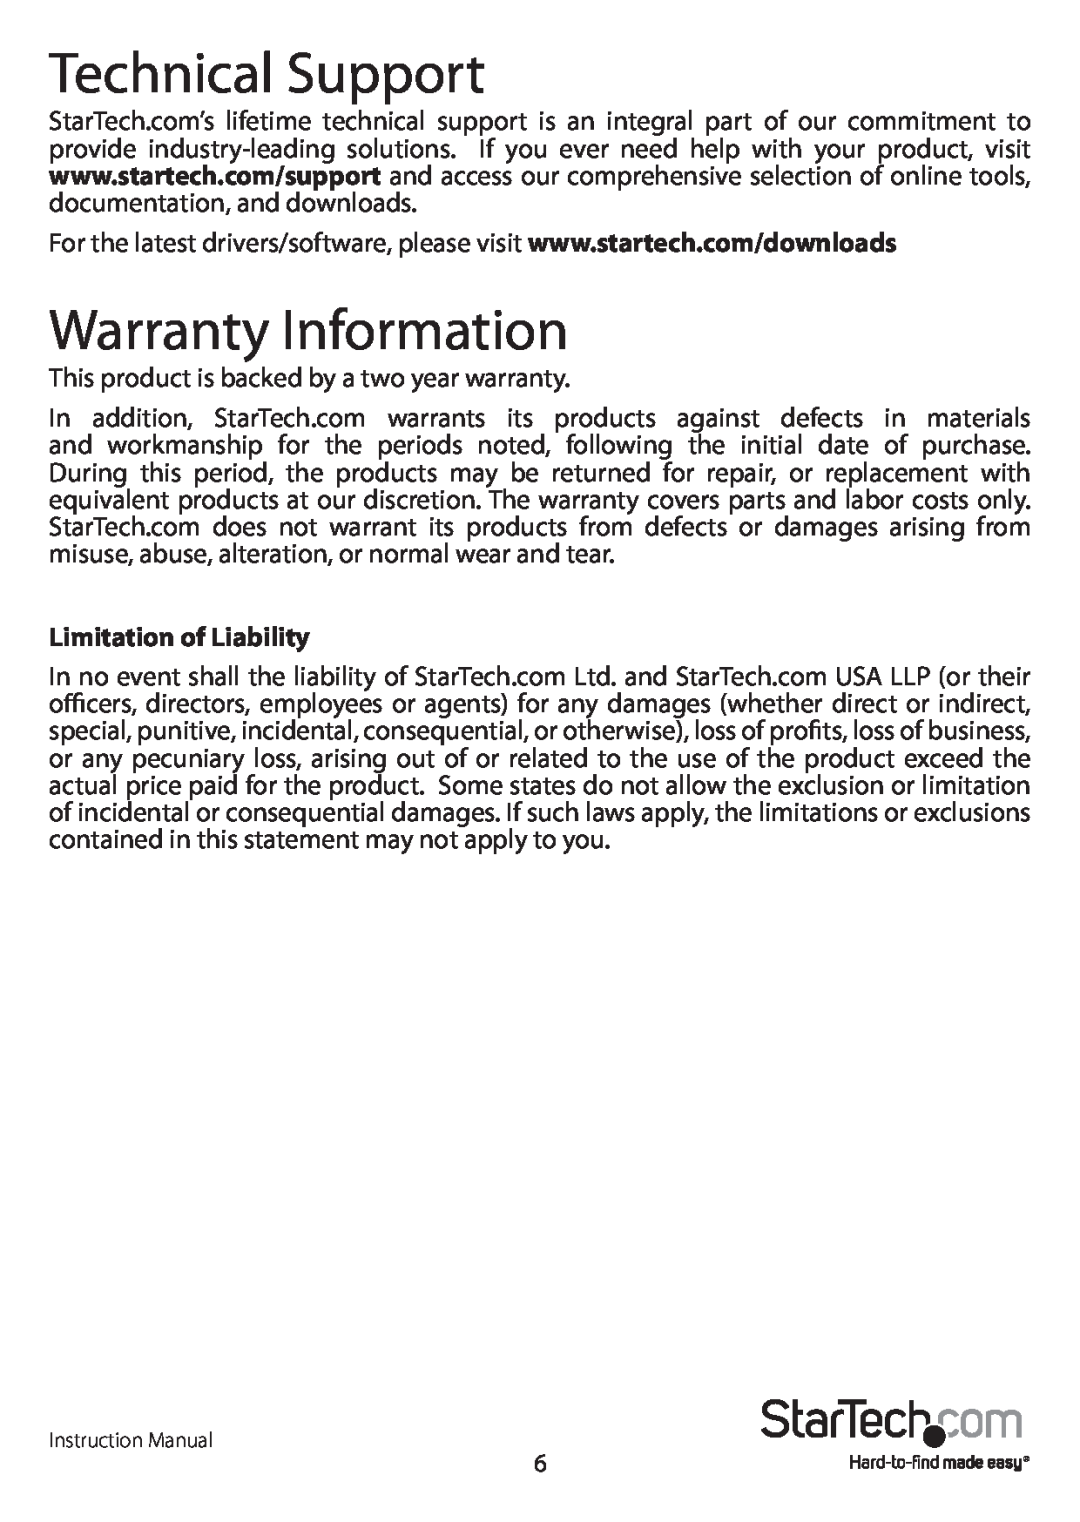 StarTech.com PEXSAT34 manual Technical Support, Warranty Information, Limitation of Liability 